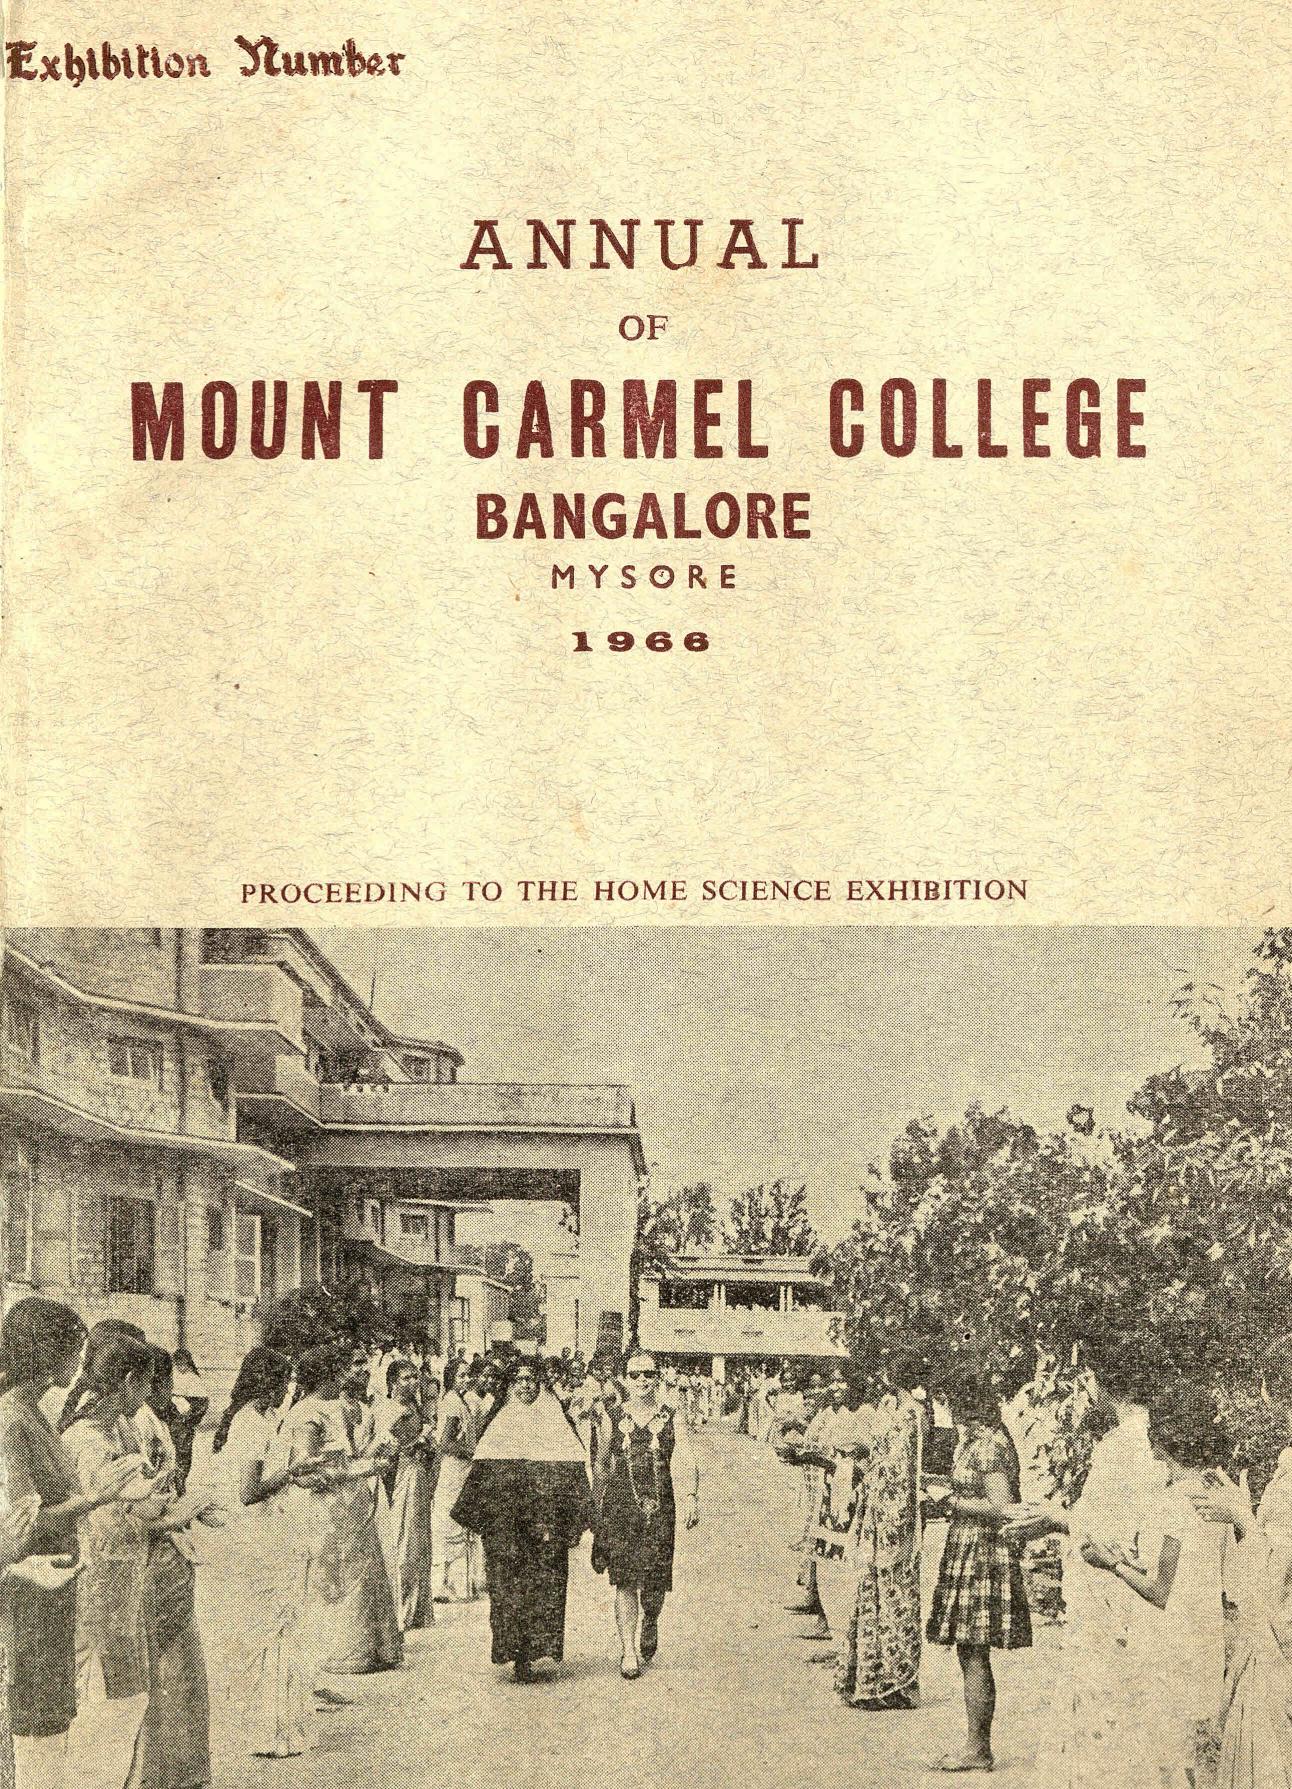 1966 - Mount Carmel College Bangalore Annual